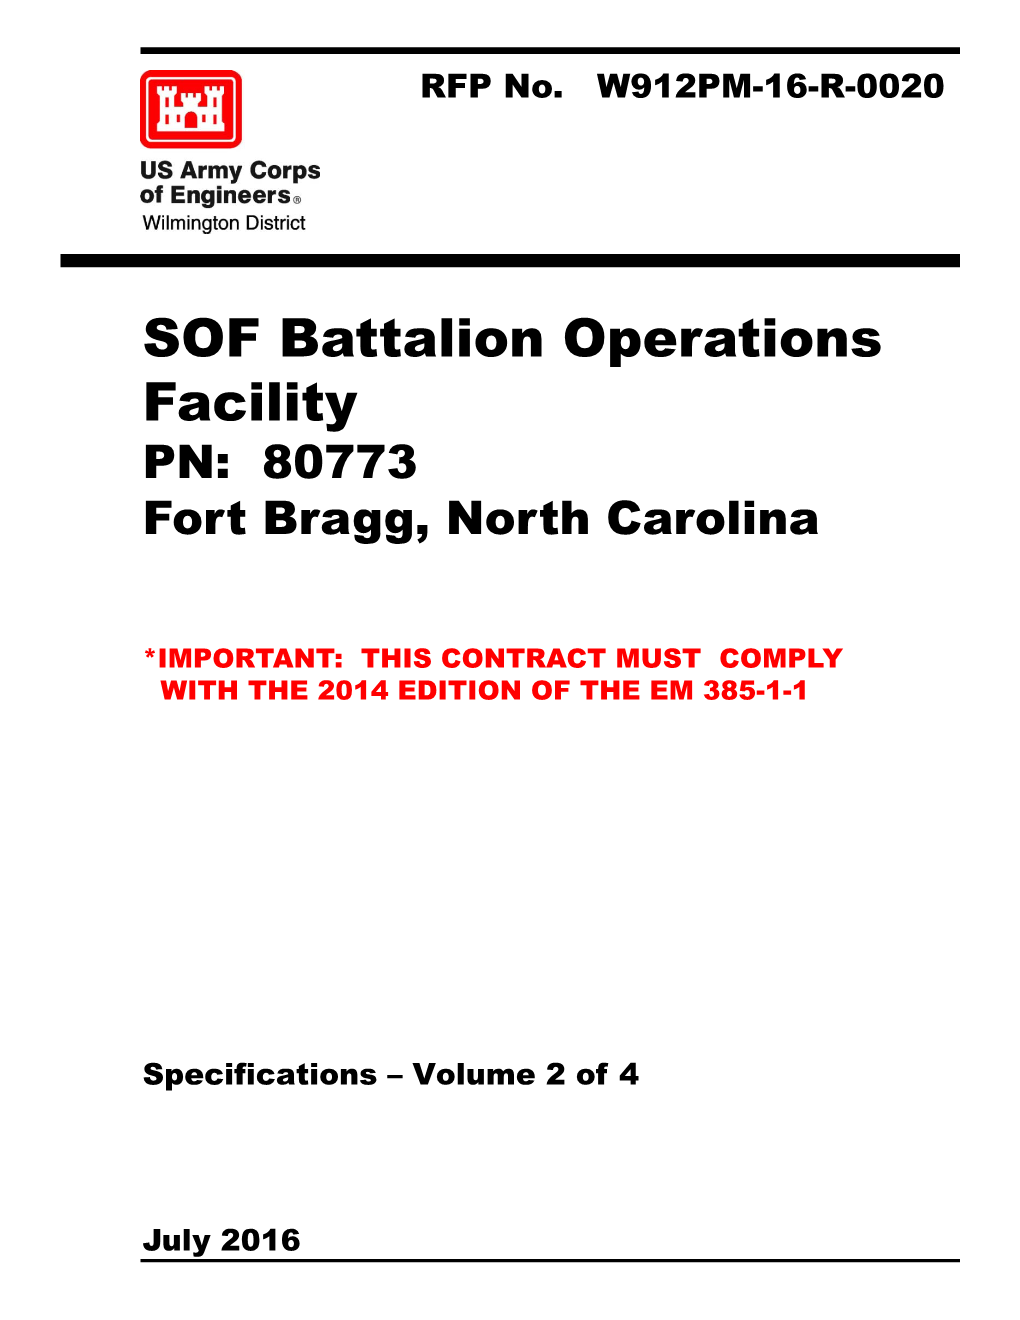 SOF Battalion Operations Facility PN: 80773 Fort Bragg, North Carolina